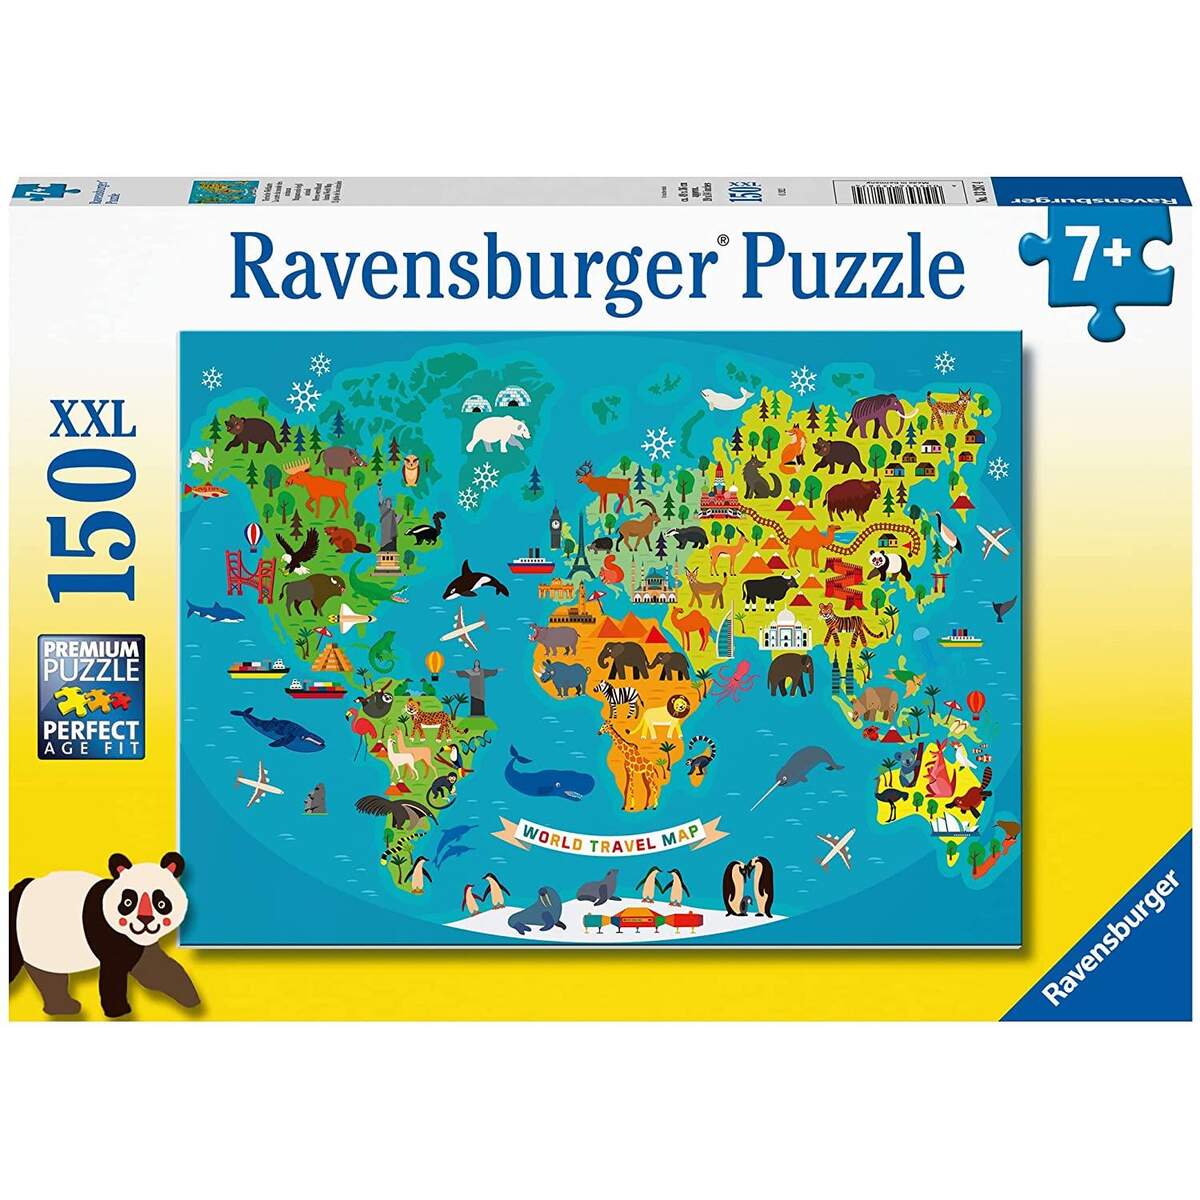 Ravensburger Kinderpuzzle - Tierische Weltkarte, 150 Teile